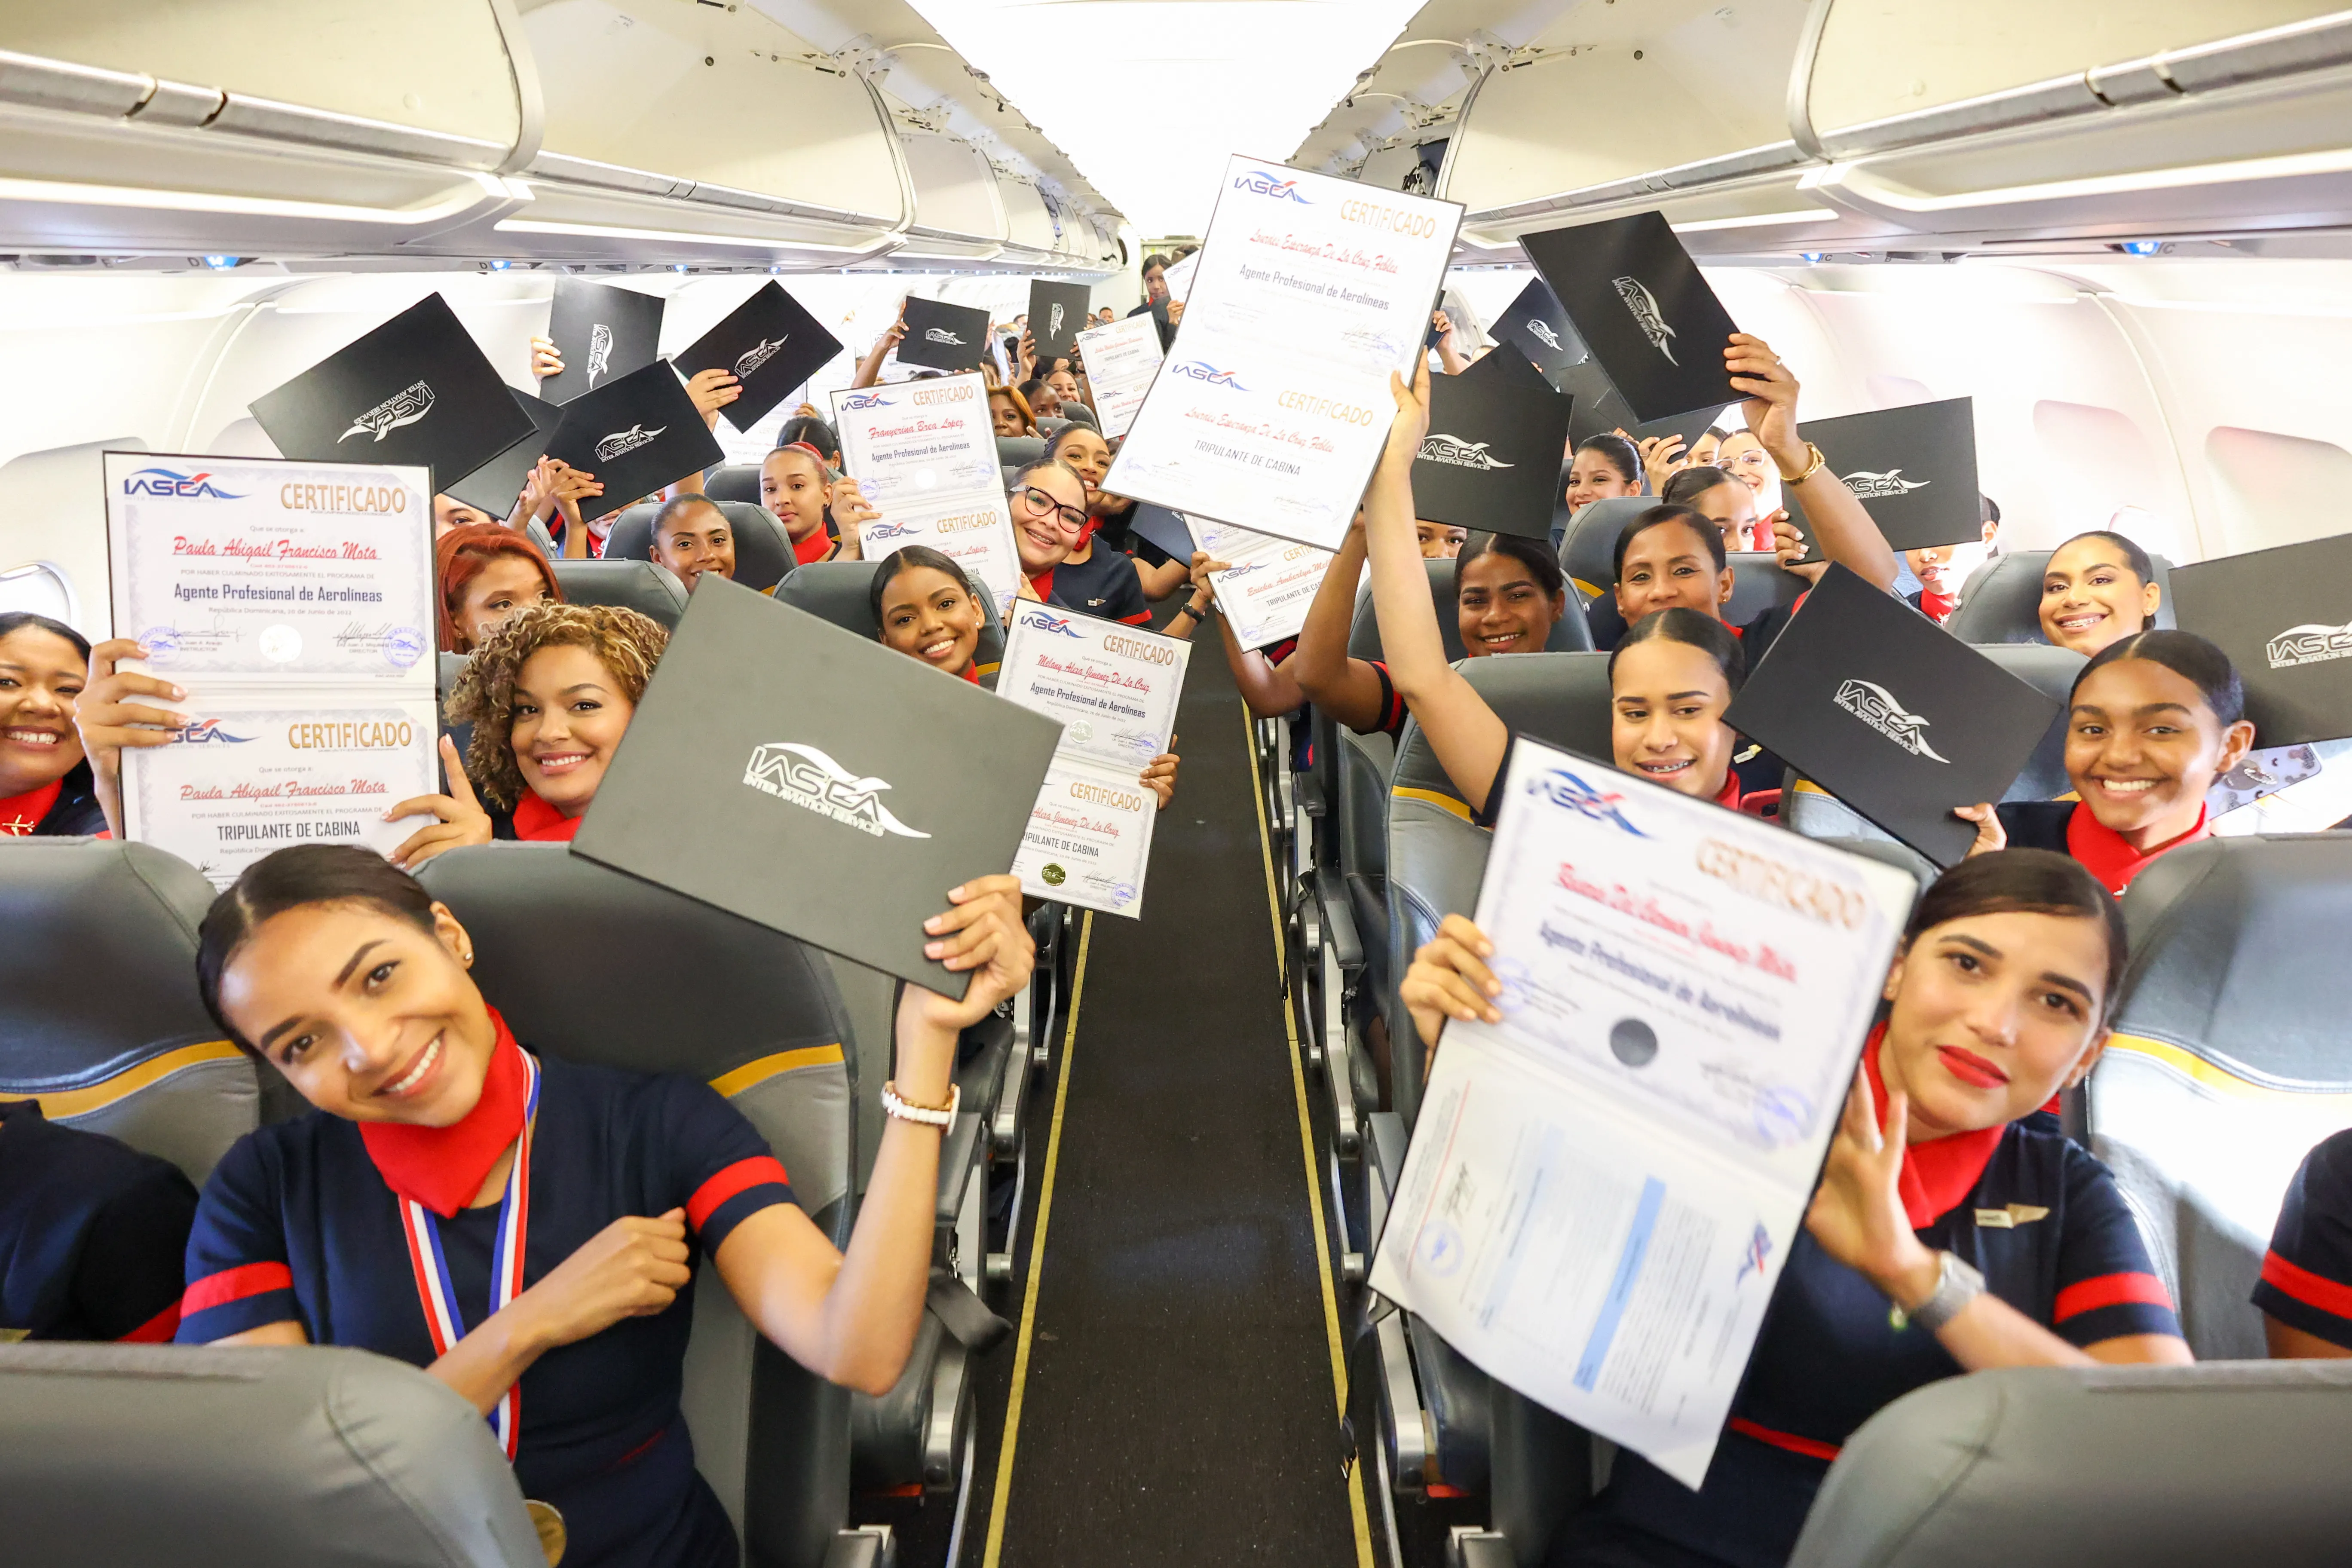 IASCA gradúa en avión en vuelo a 100 estudiantes dominicanos